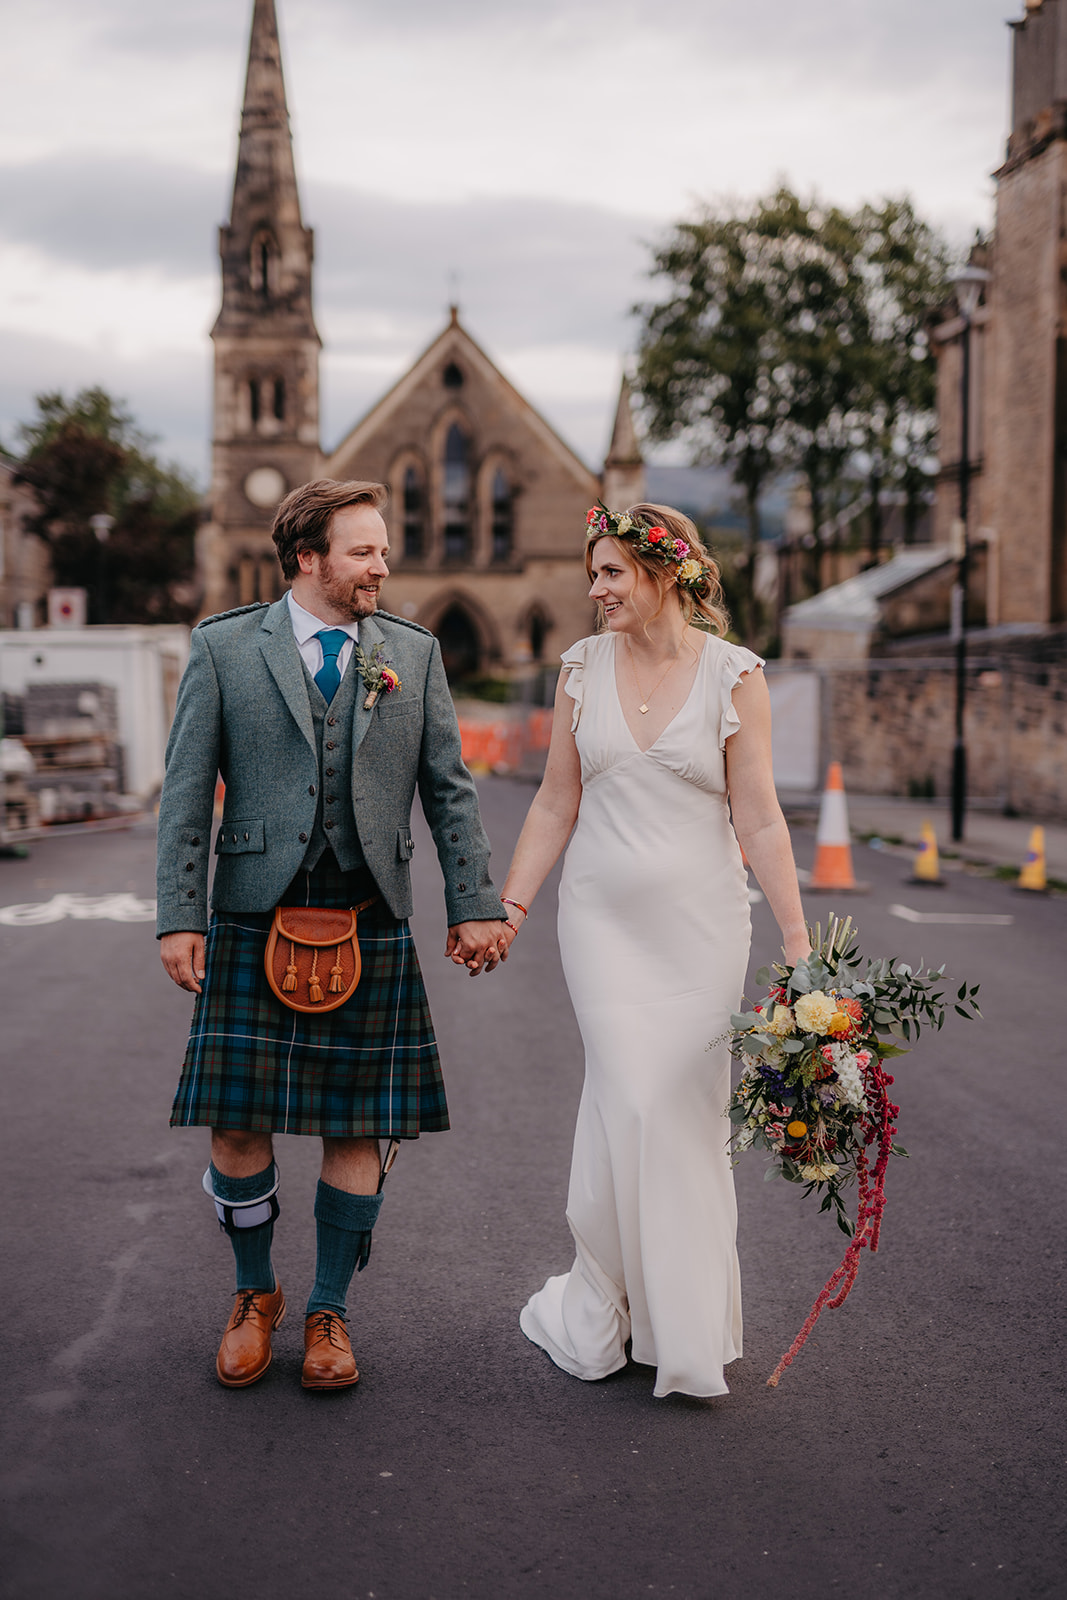 Edinburgh wedding couple walk together